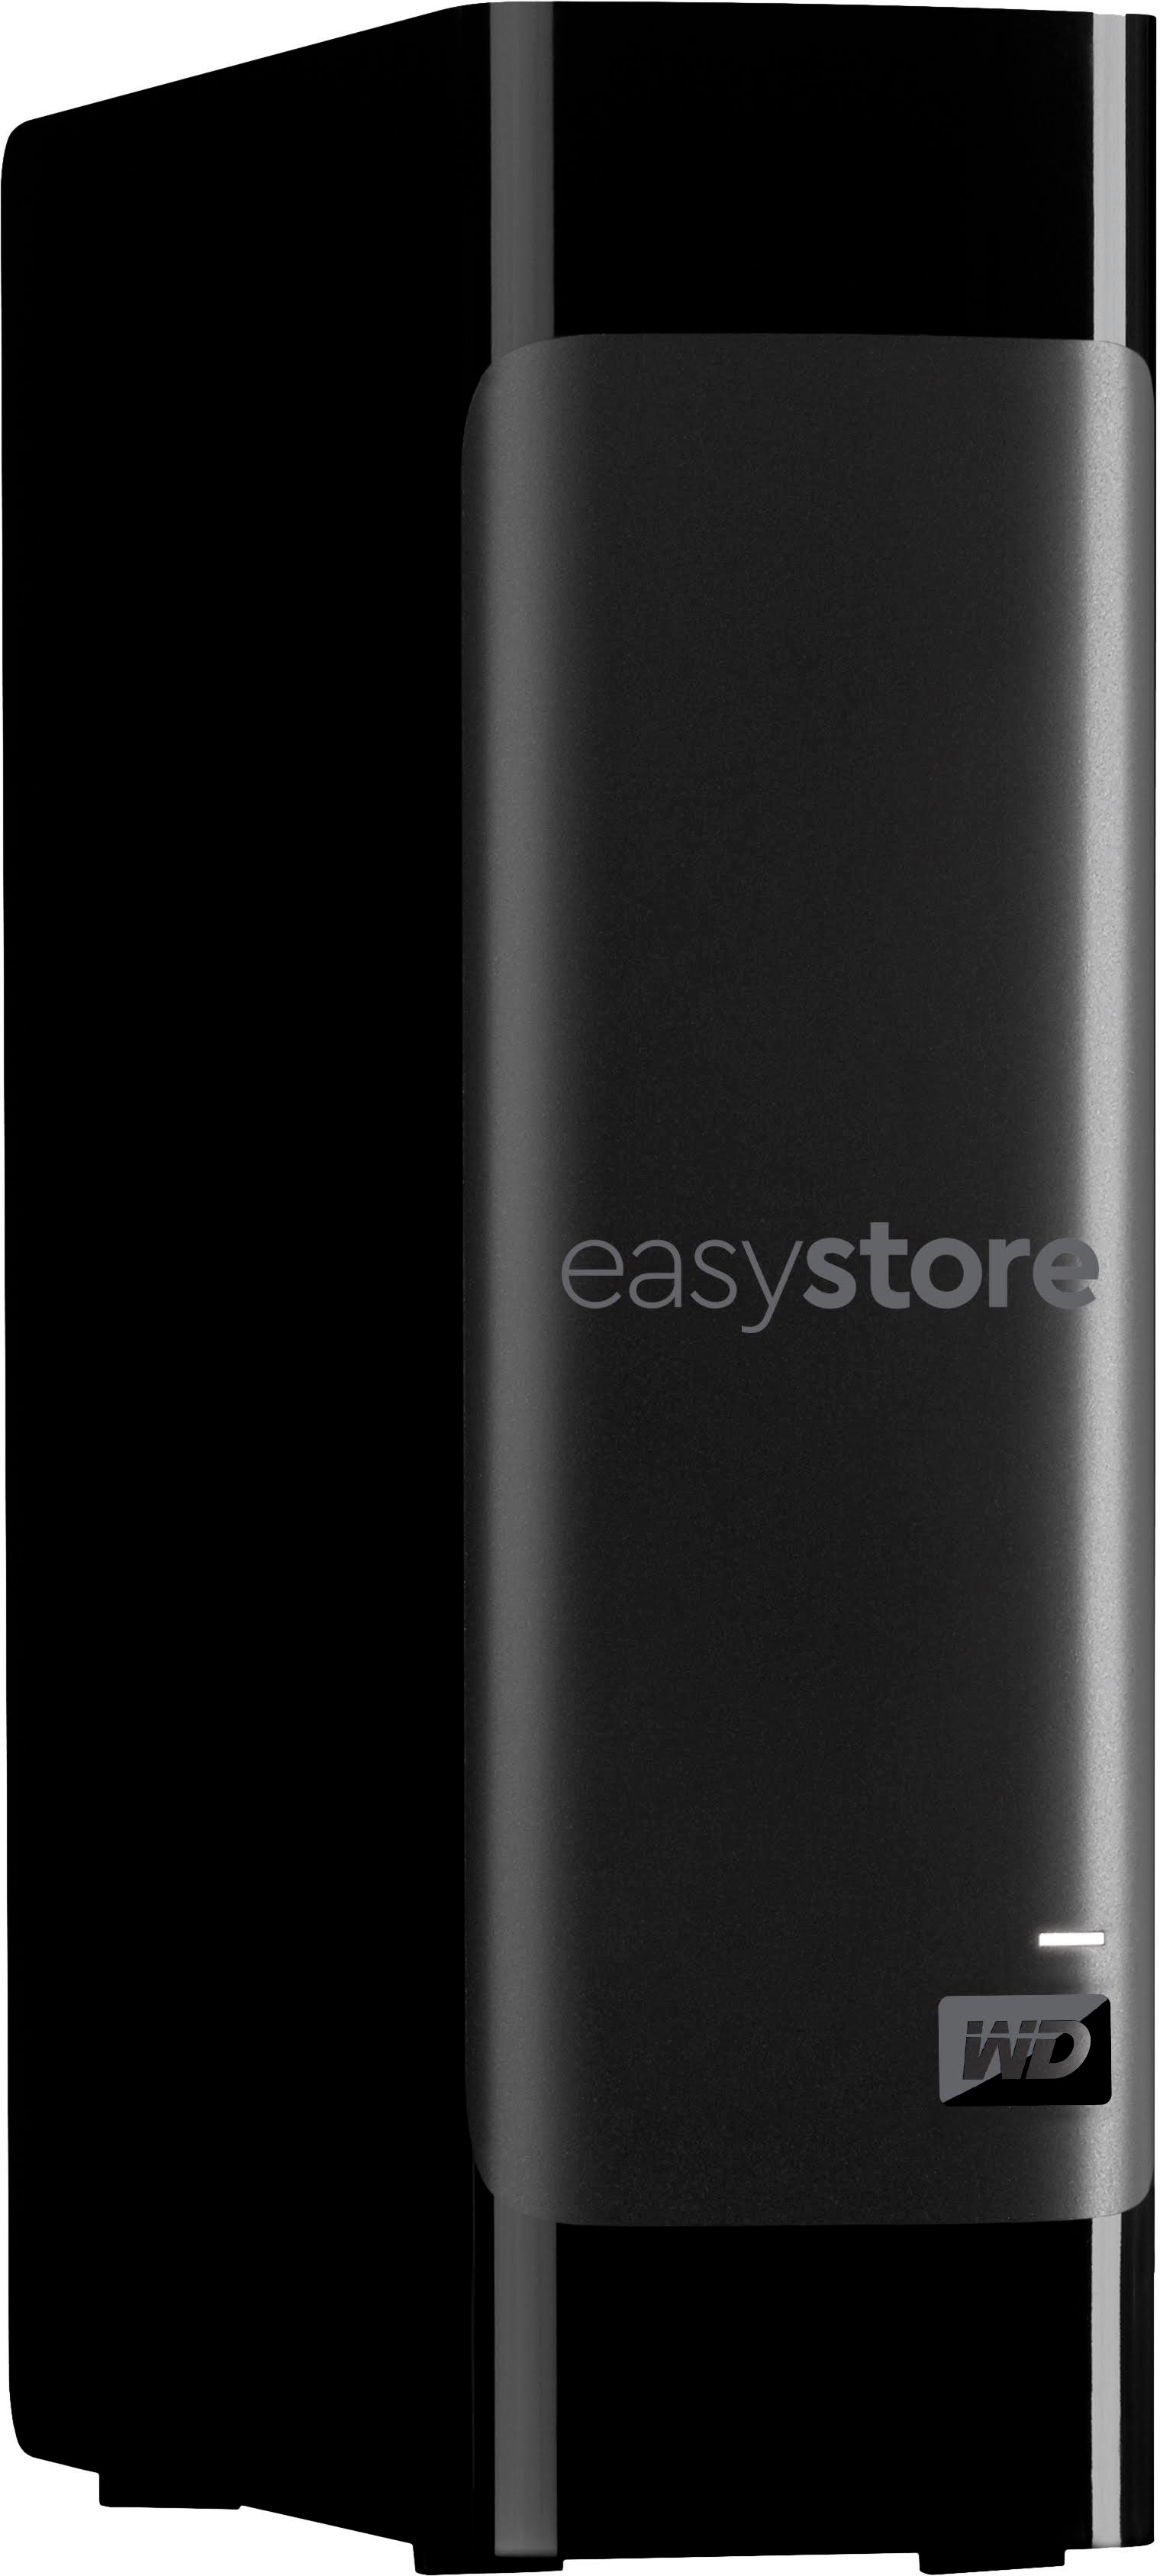 Left View: WD - easystore 22TB External USB 3.0 Hard Drive - Black